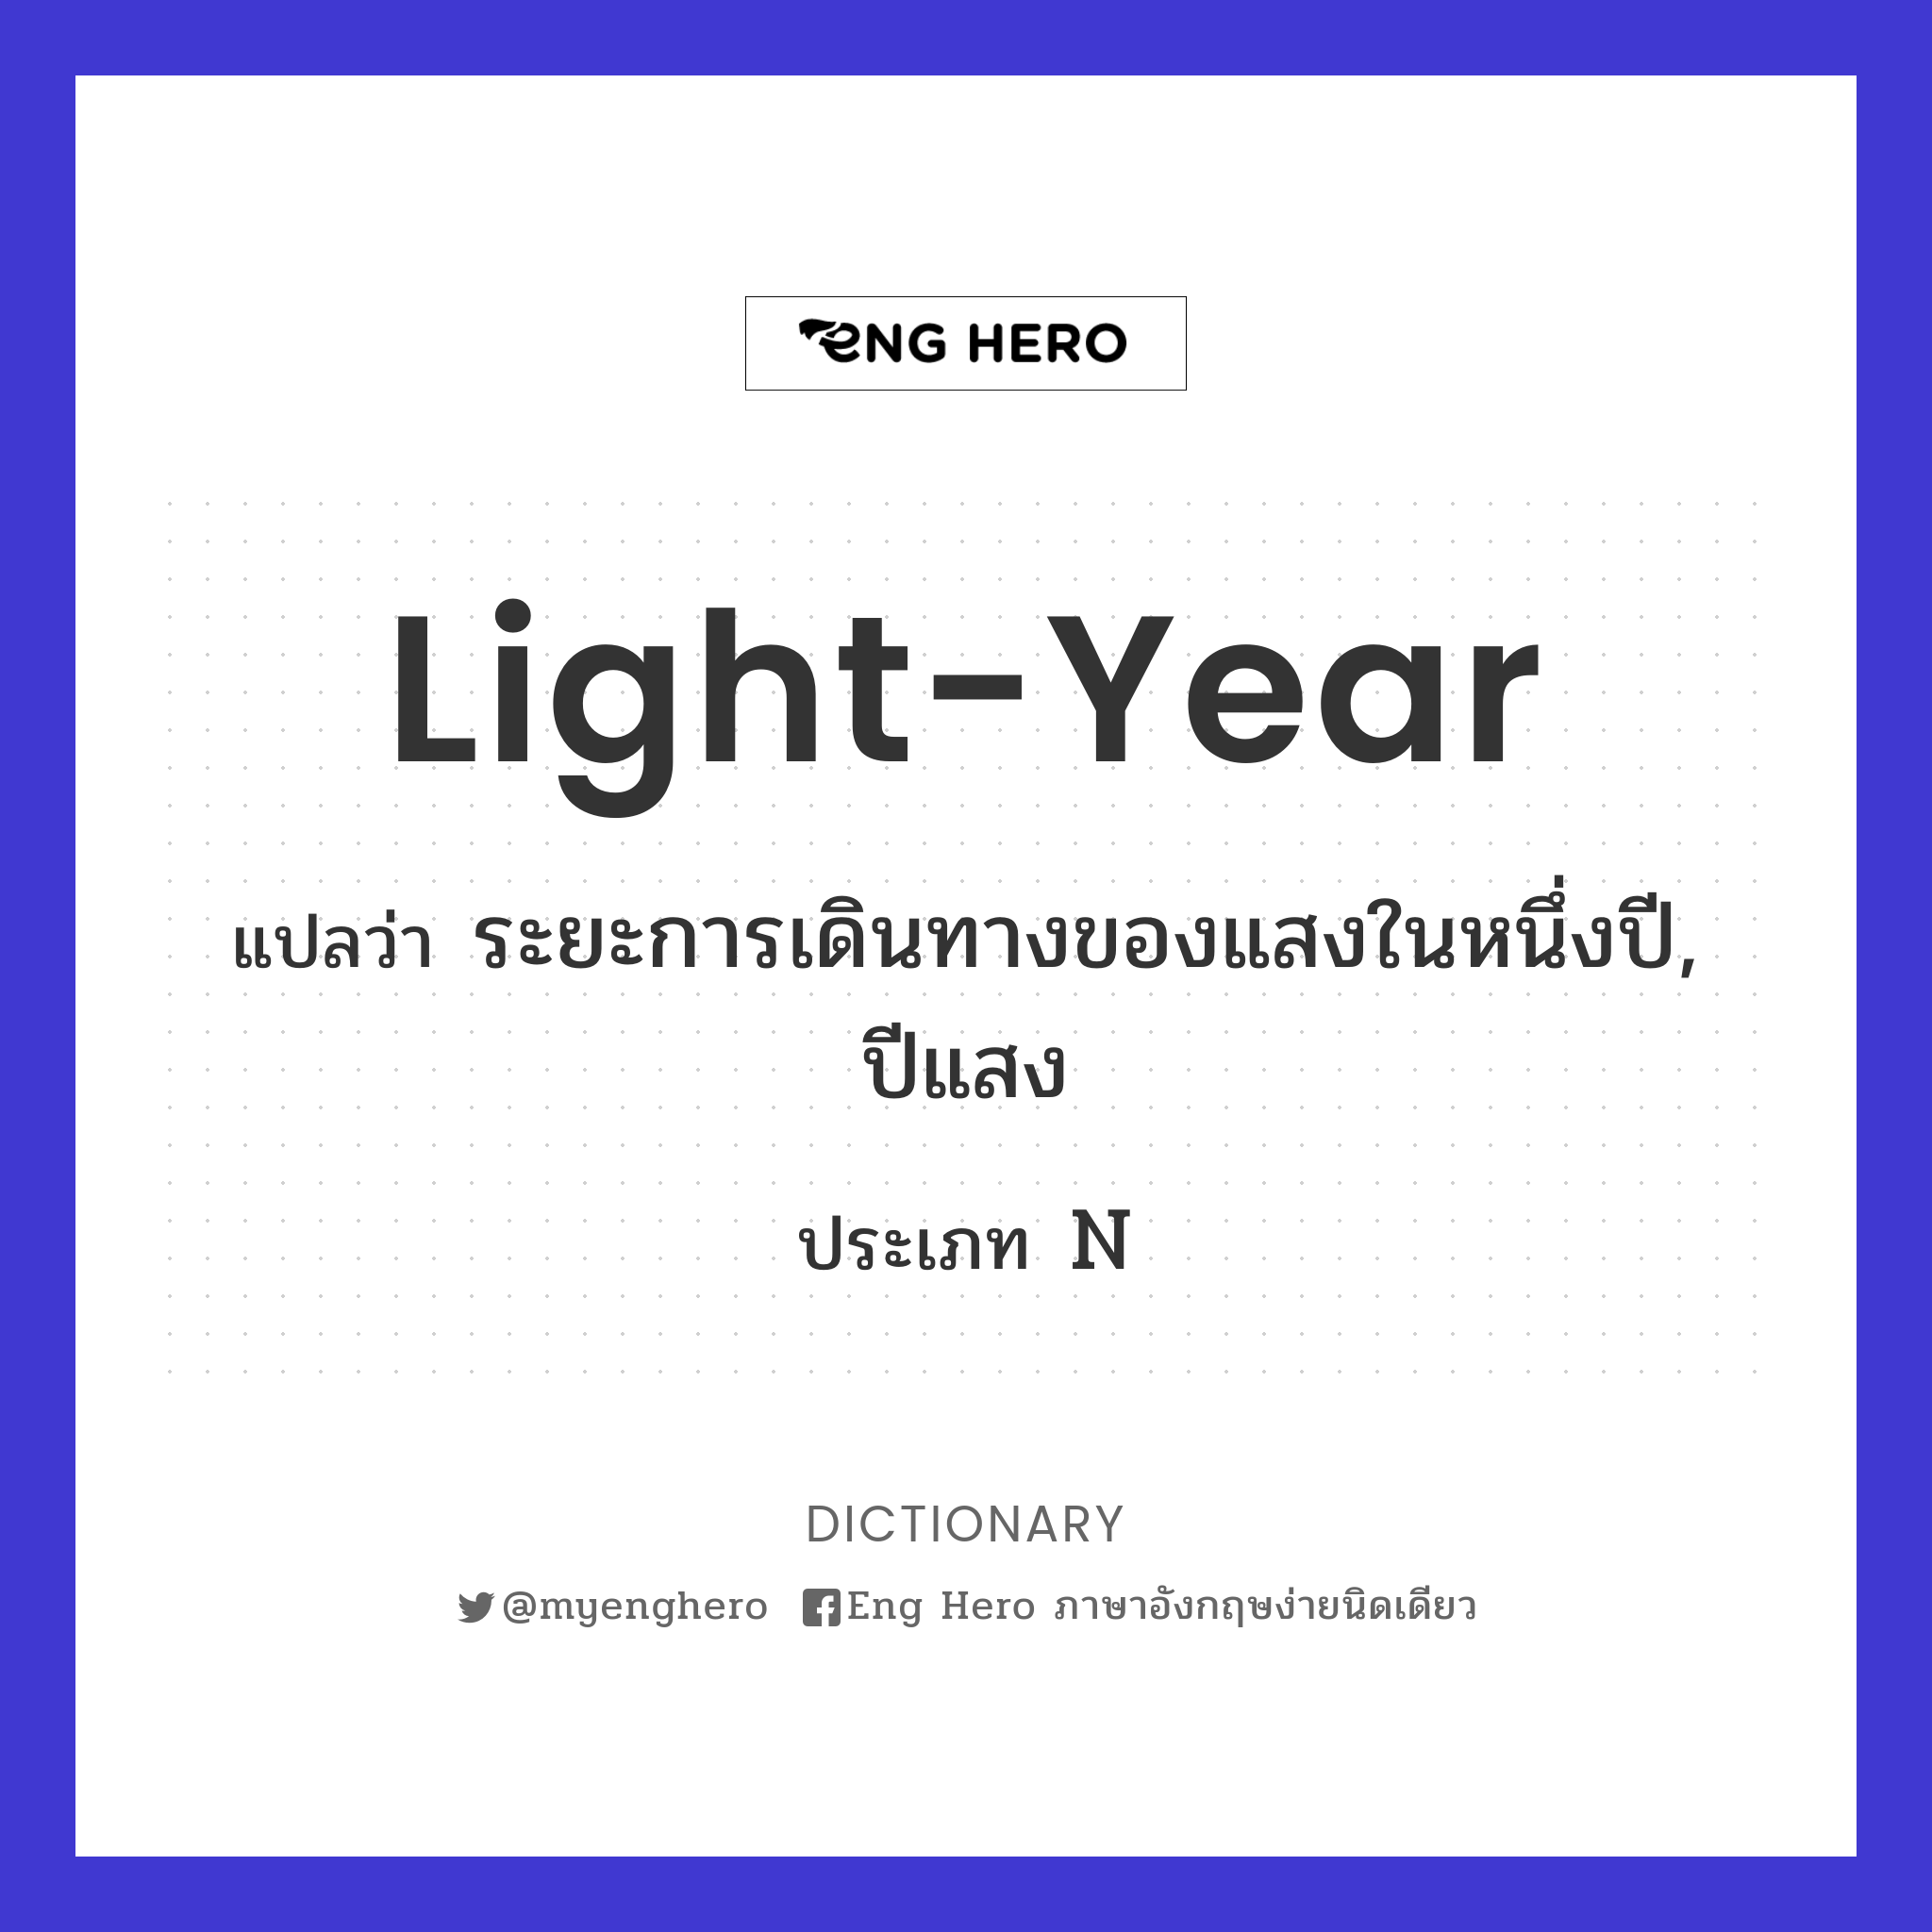 light-year